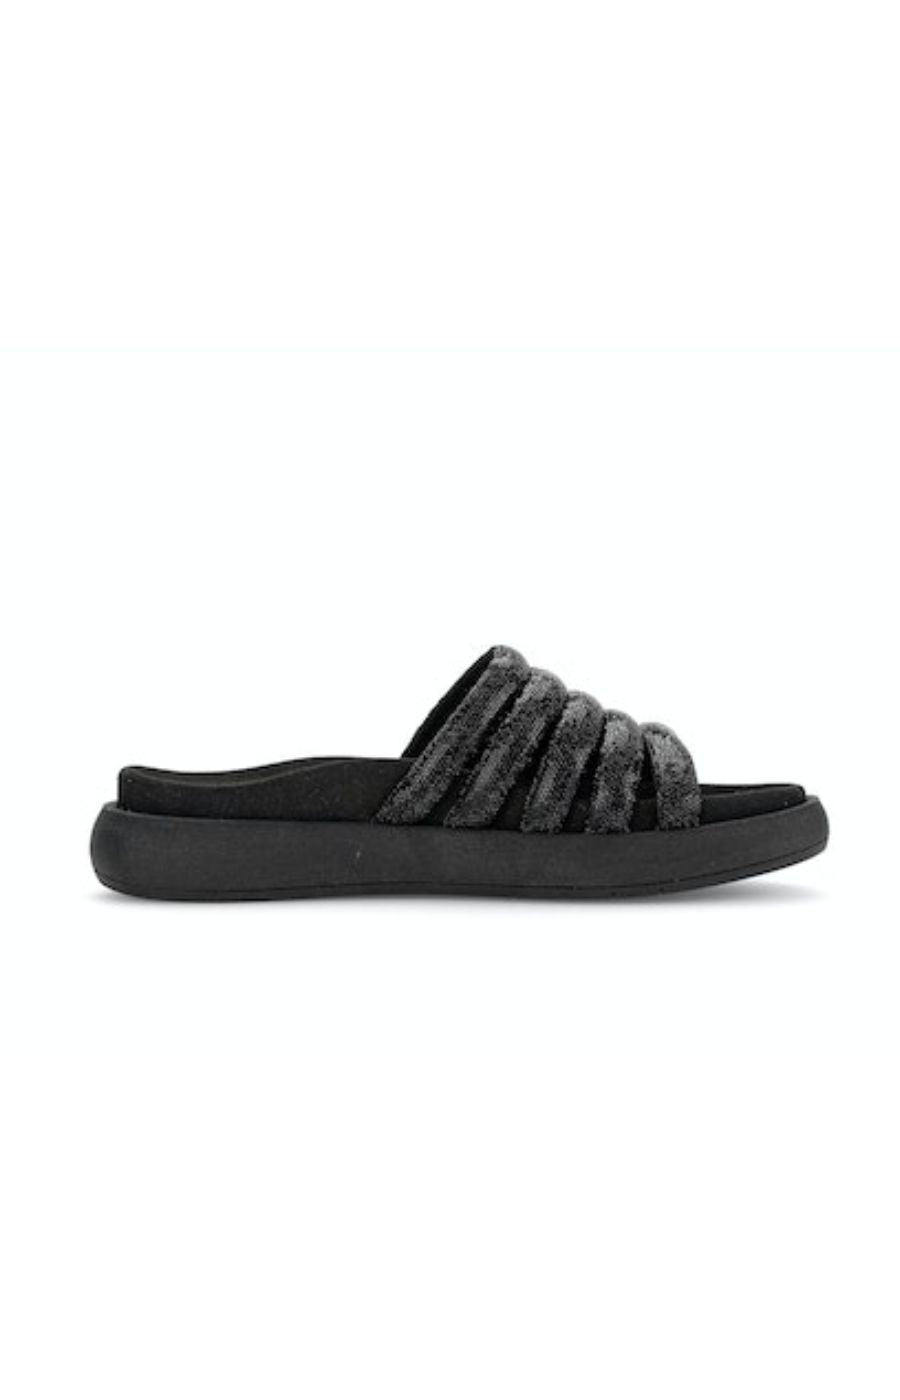 Gabor Sparkle Sandal in Black